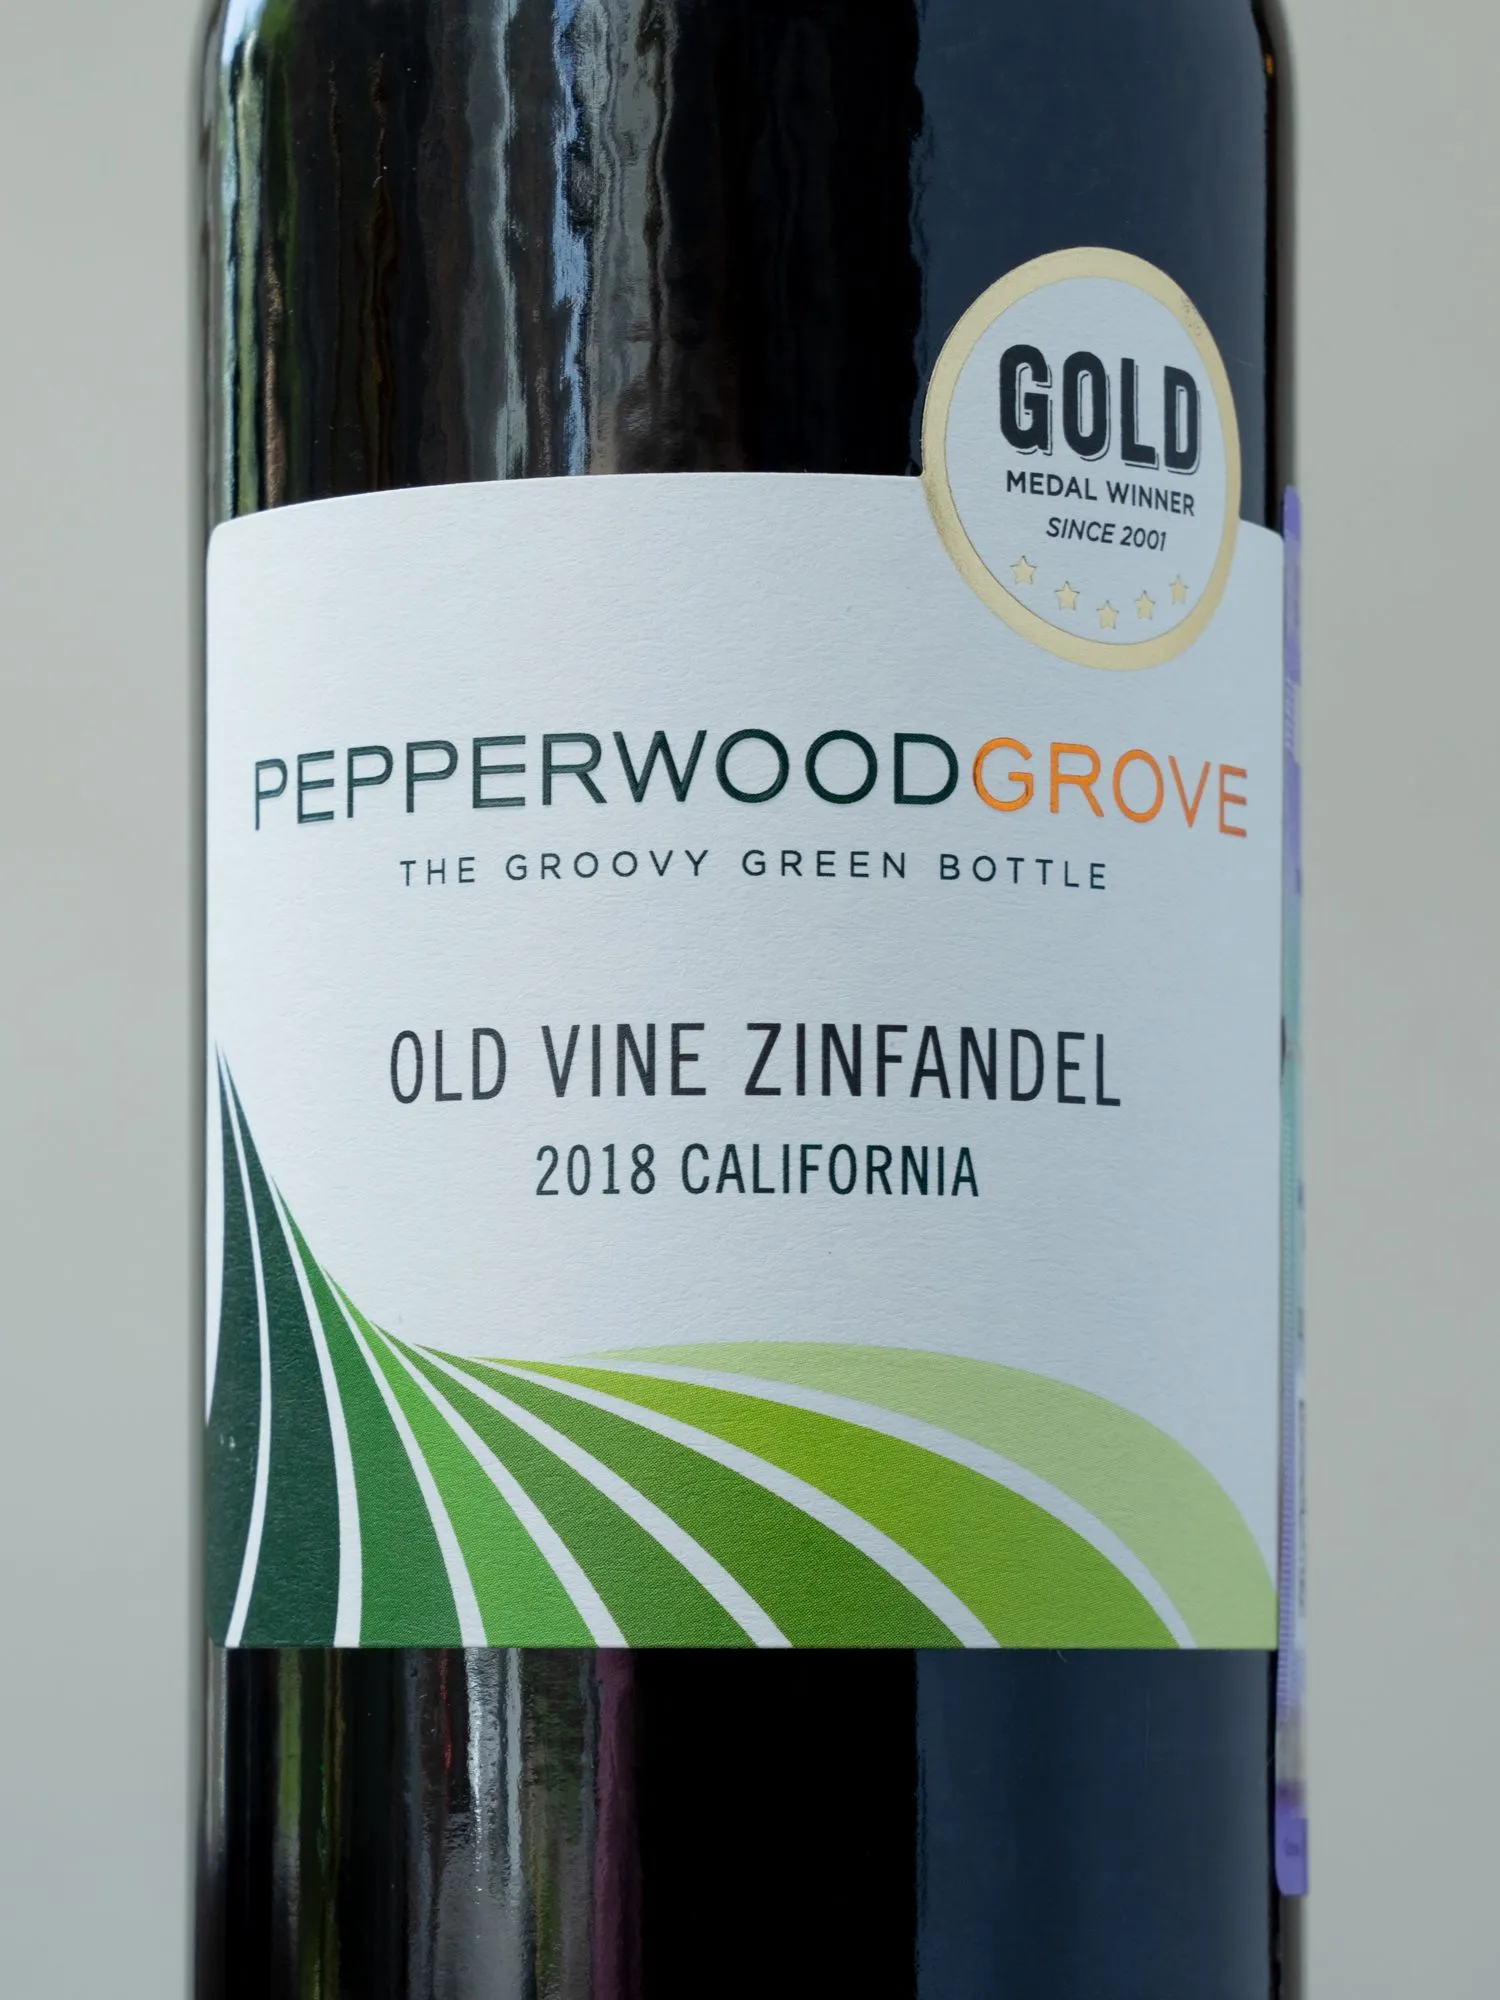 Вино Pepperwood Grove Old Vine Zinfandel / Пеппервуд Грув Олд Вайн Зинфандель